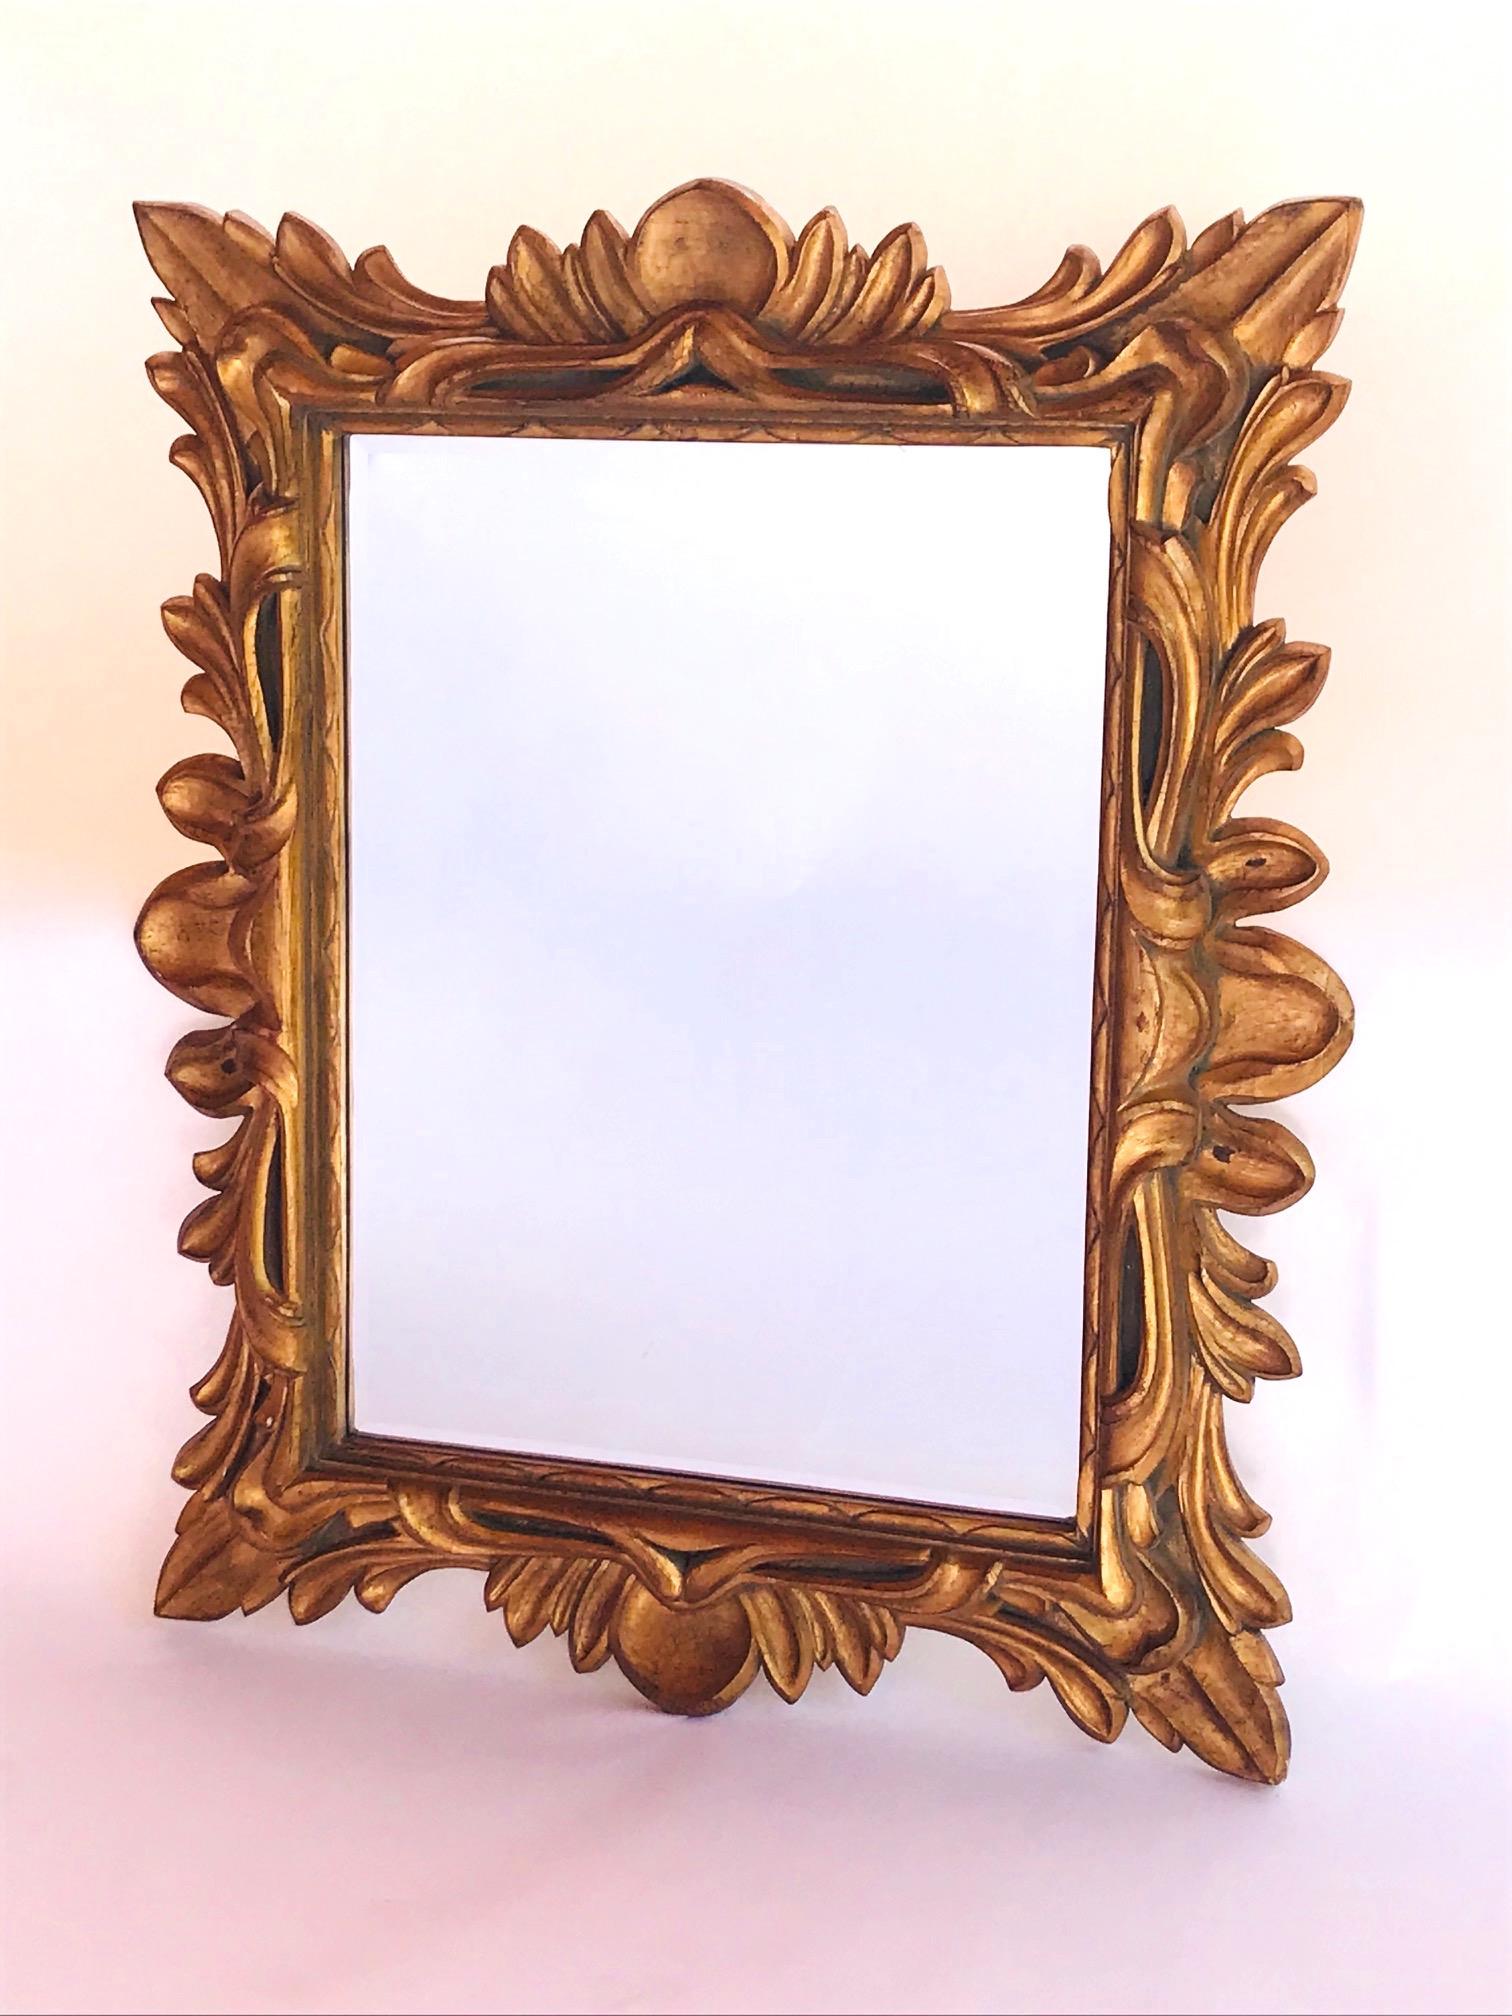 Monumental Baroque Gold Leaf Mirror with Ornate Carved Frame 5